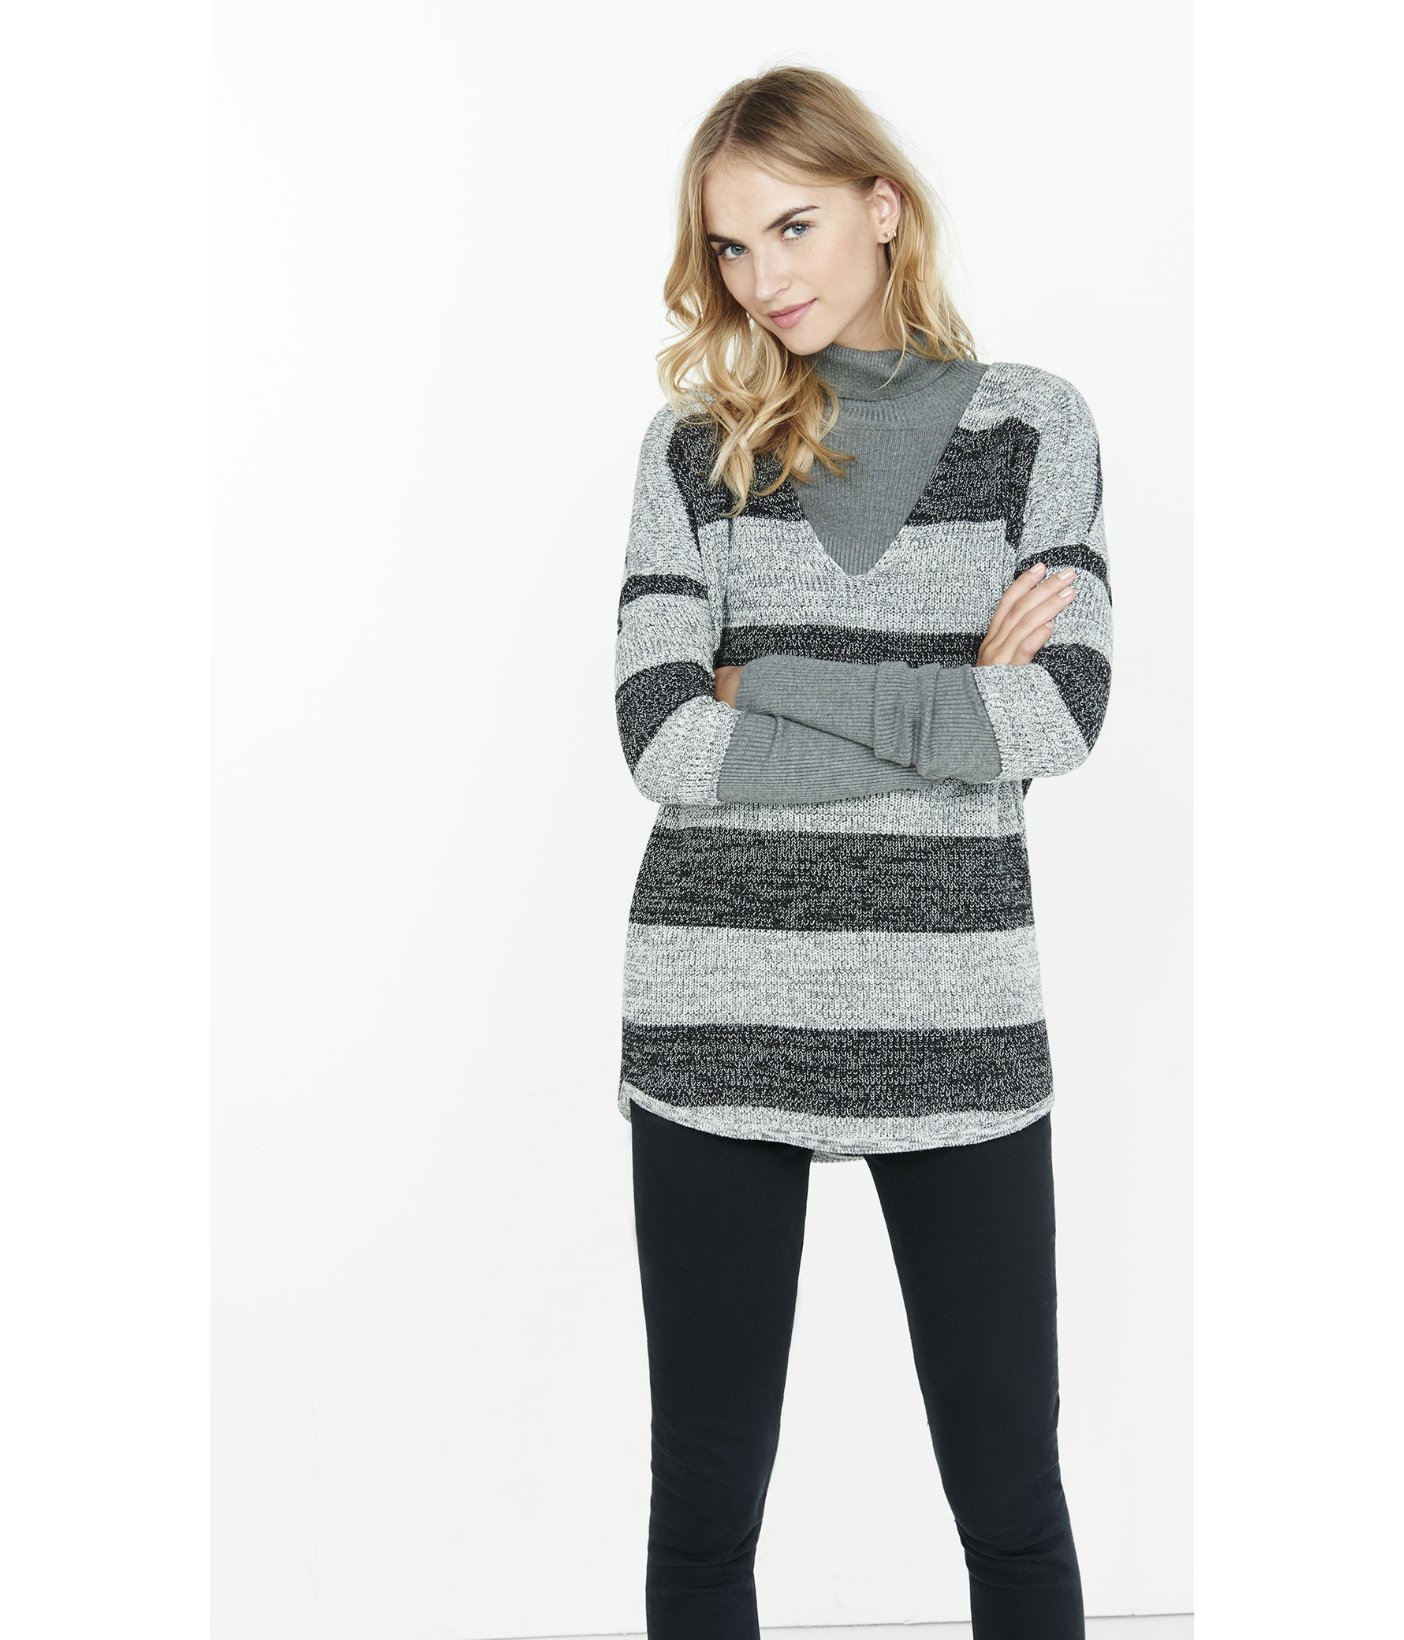 Express Marl Stripe London Tunic Sweater in Black | Lyst